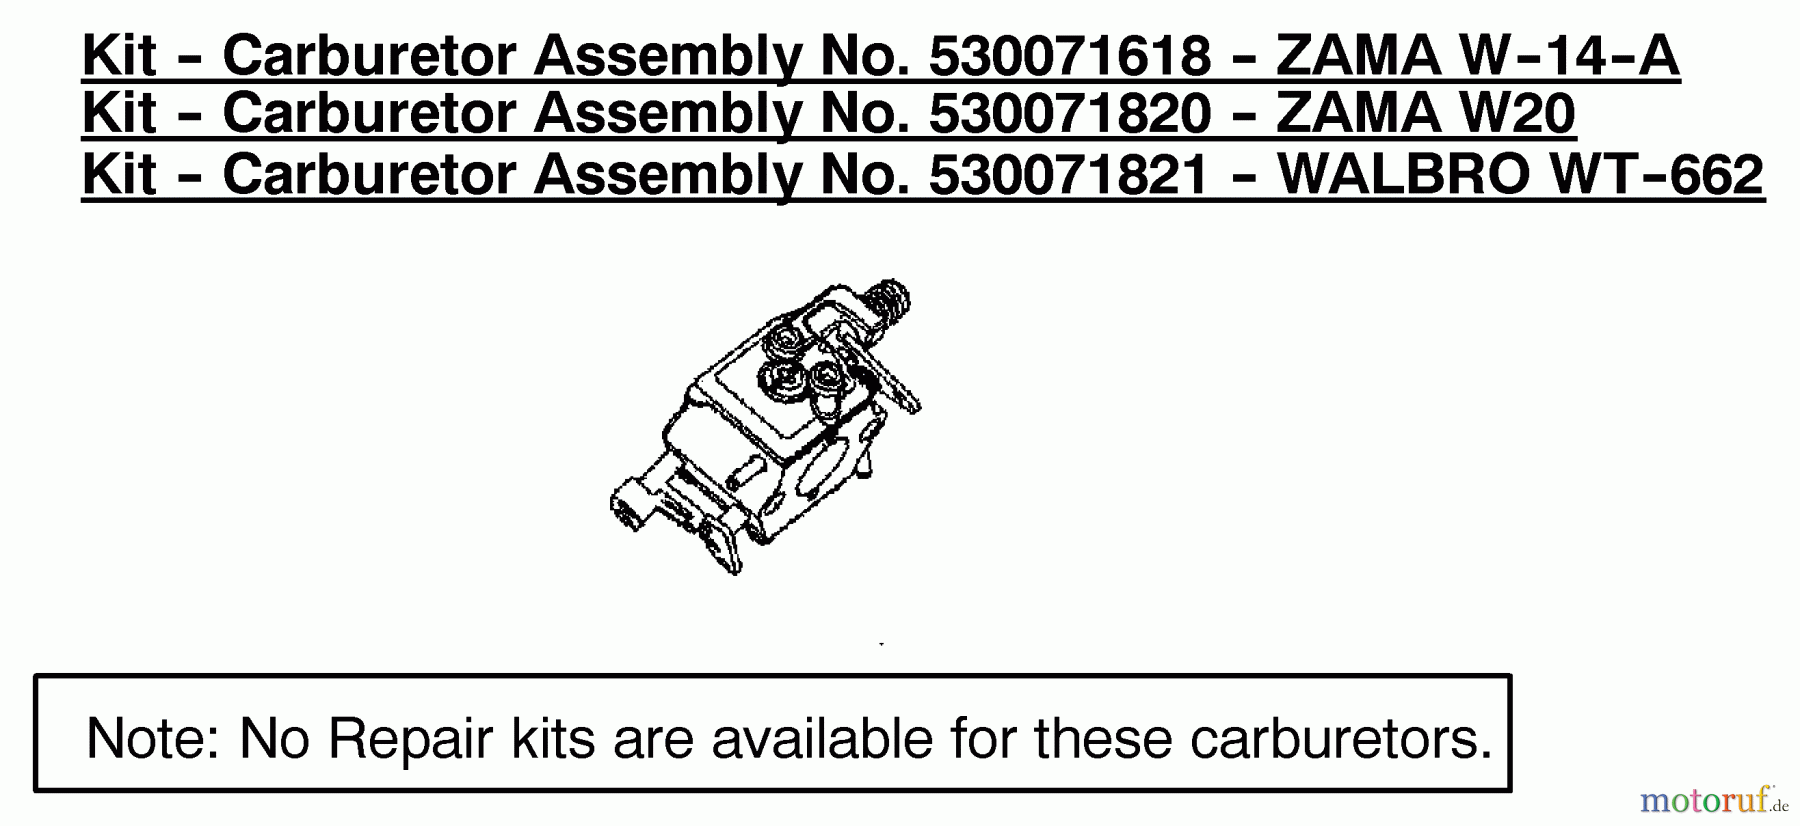  Poulan / Weed Eater Motorsägen 1975 (Type 1) - Poulan Woodshark Chainsaw Carburetor Assembly (Zama W-14-A) P/N 530071618